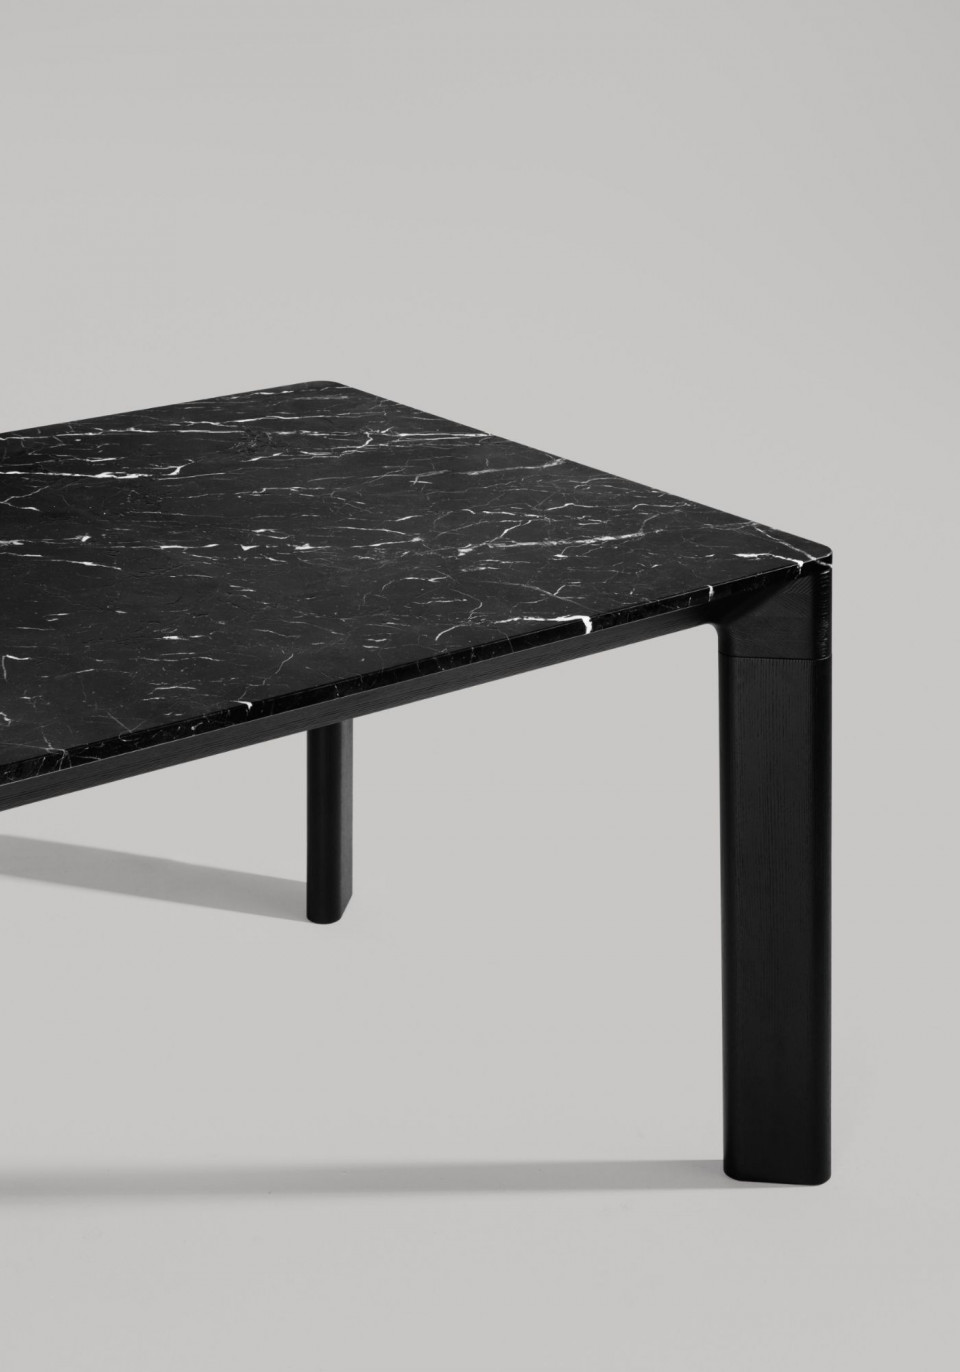 Planum table design Studio Pastina for MIDJ